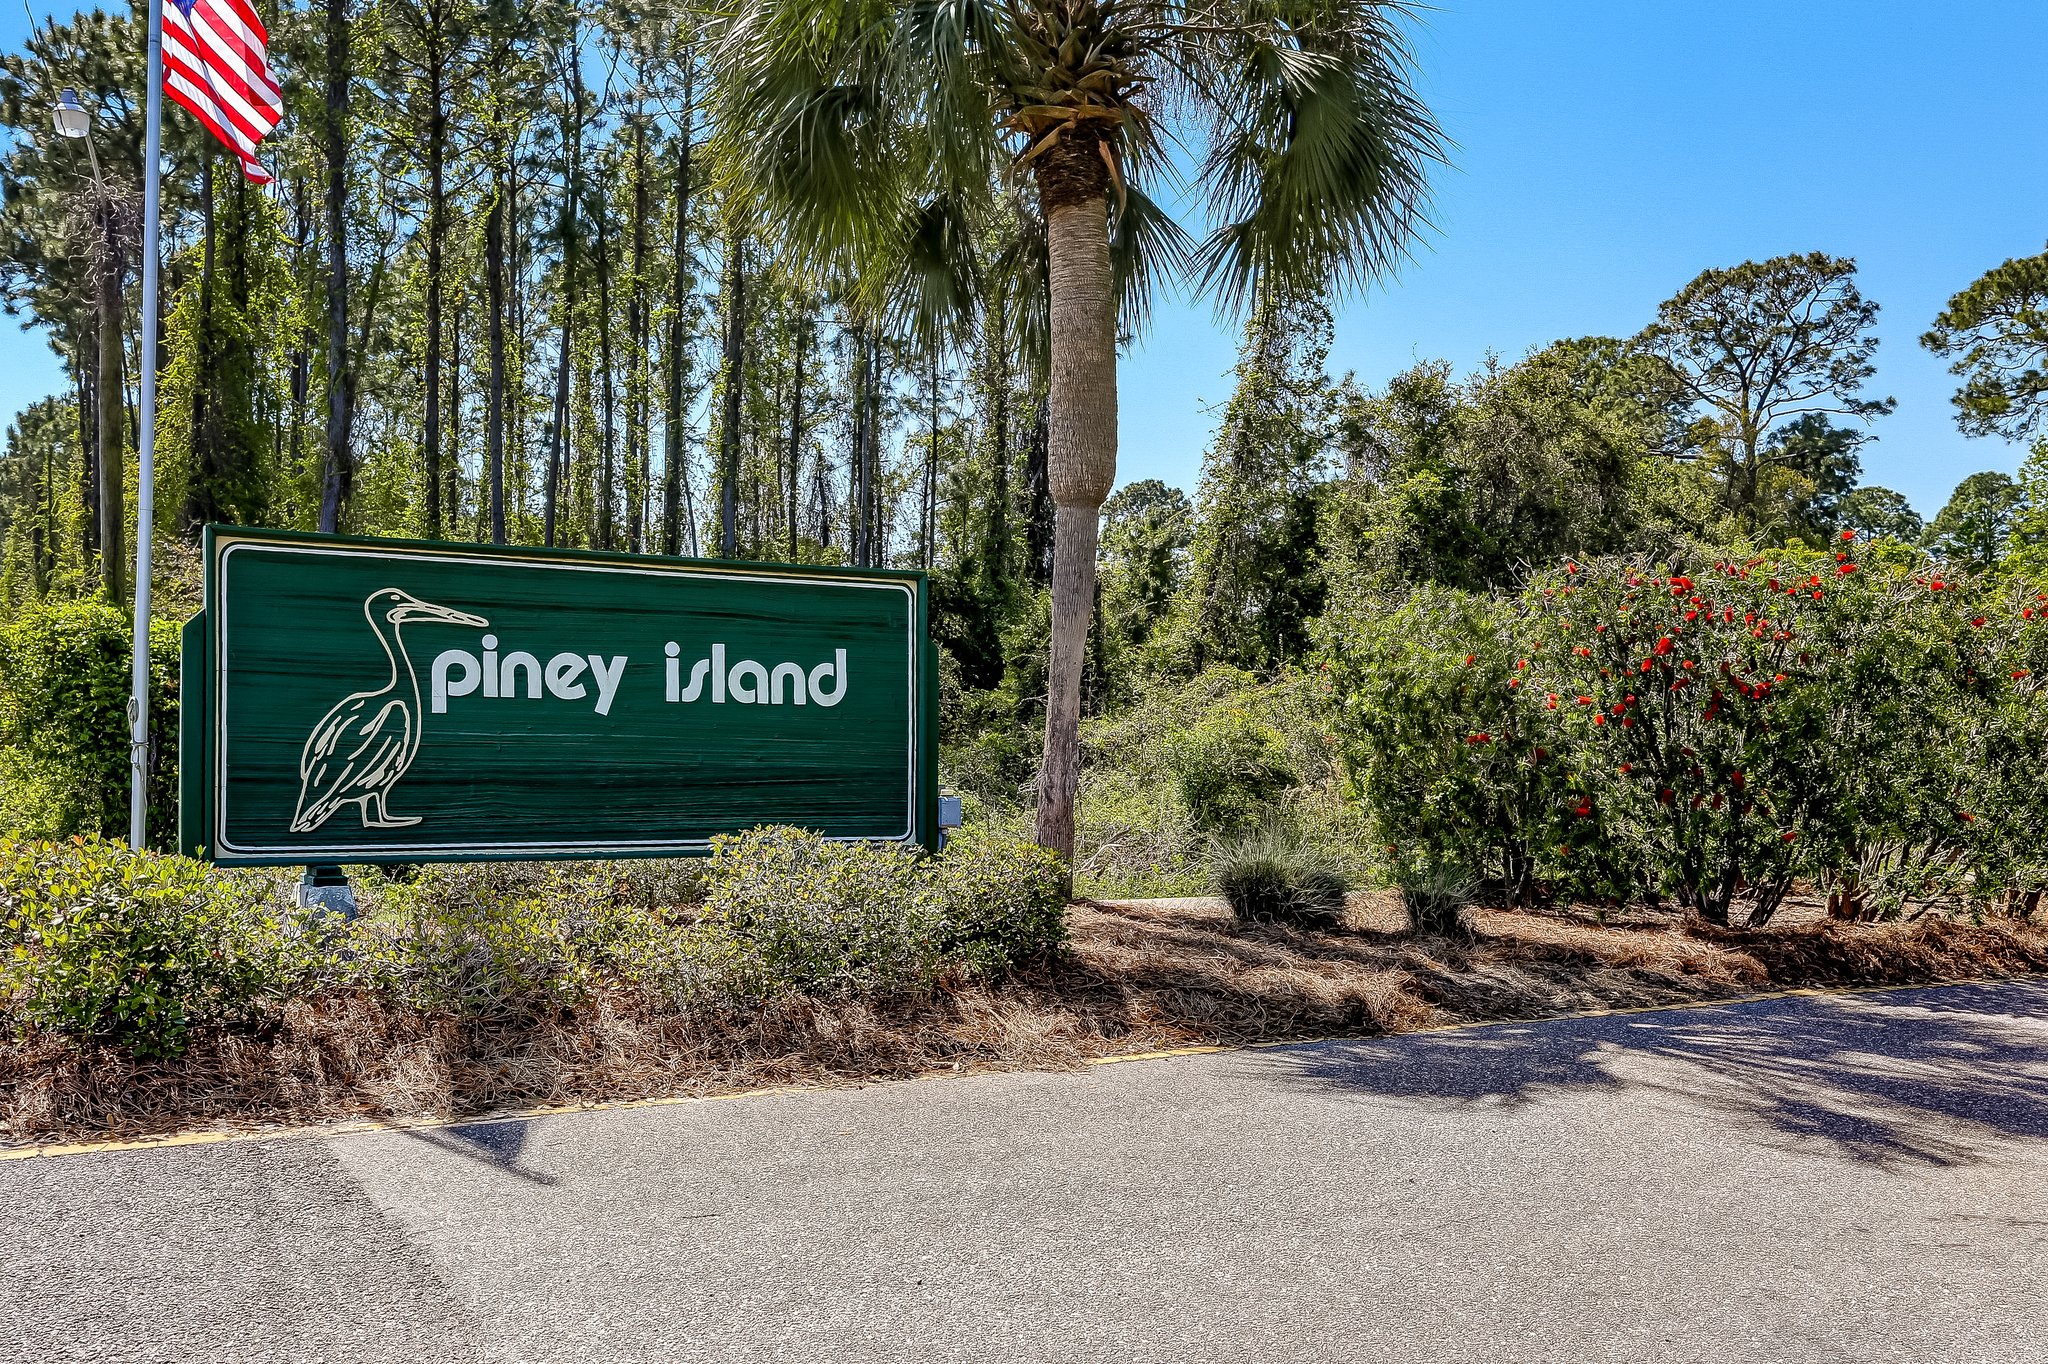 Piney Island